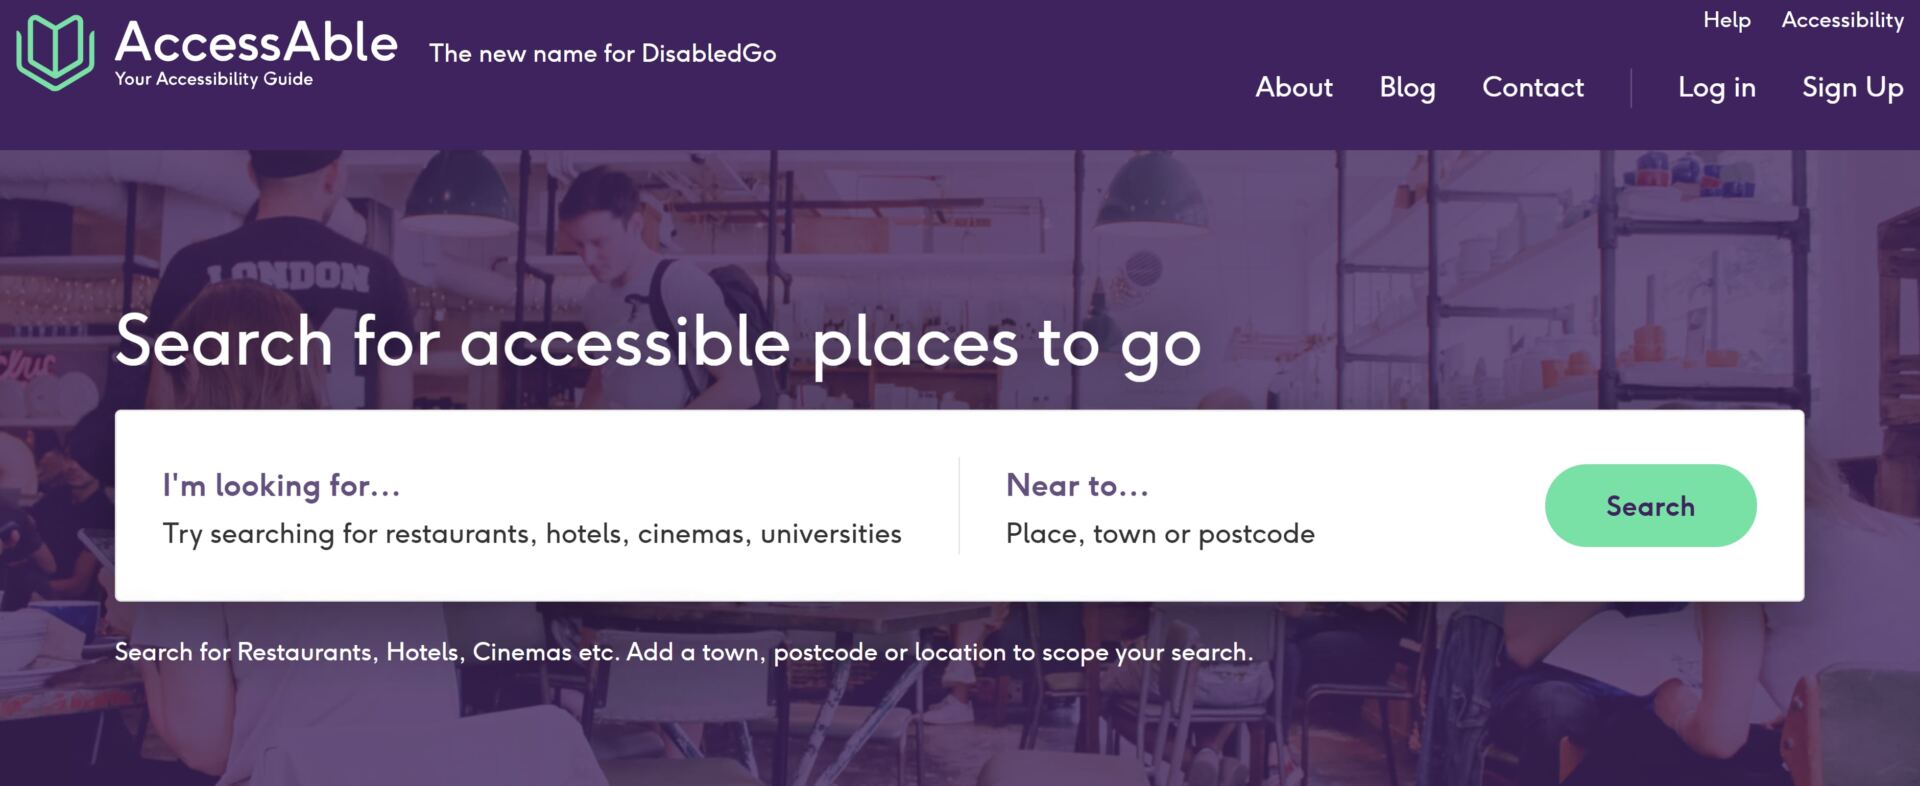 AccessAble's website 